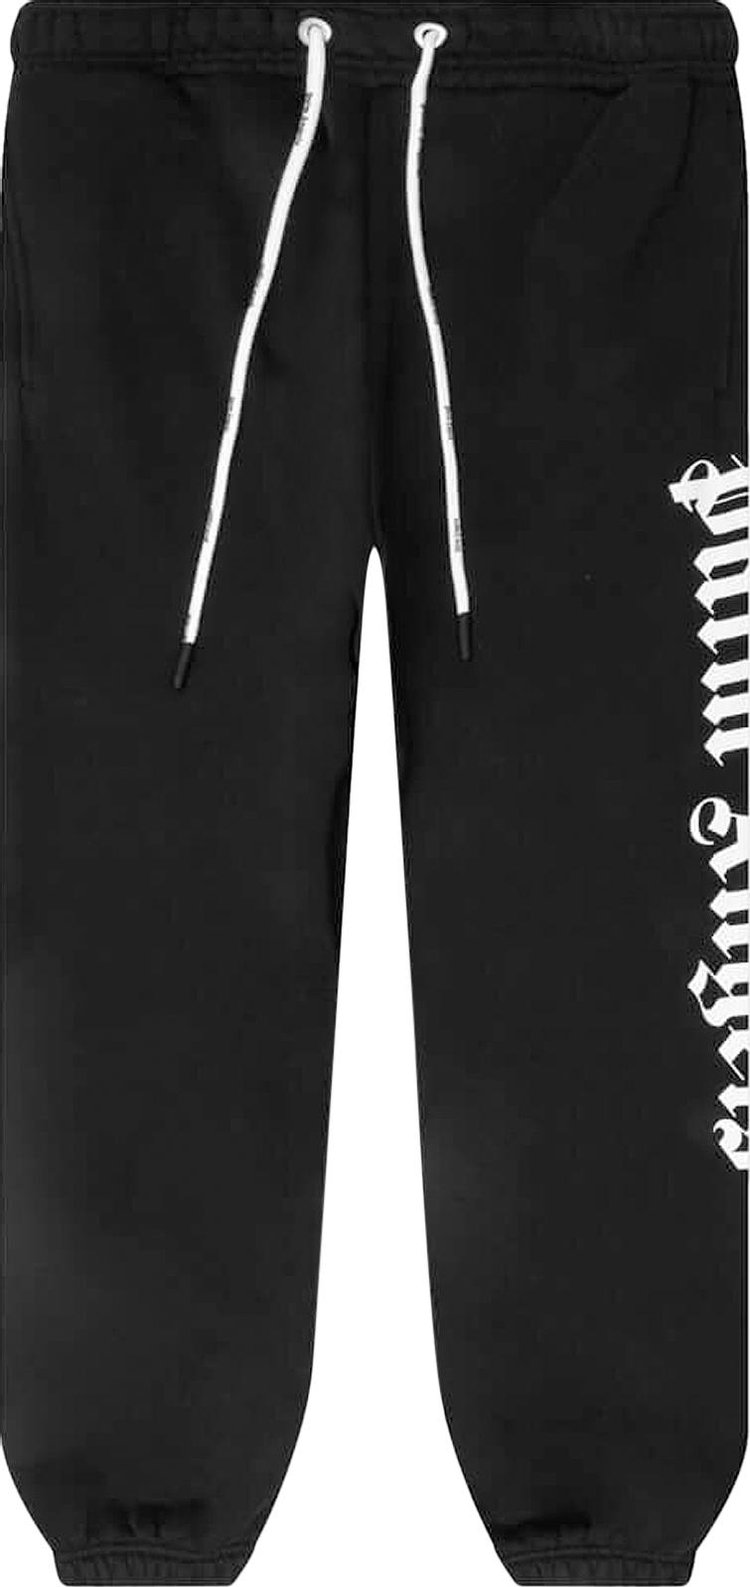 Sweatpants - Black / White